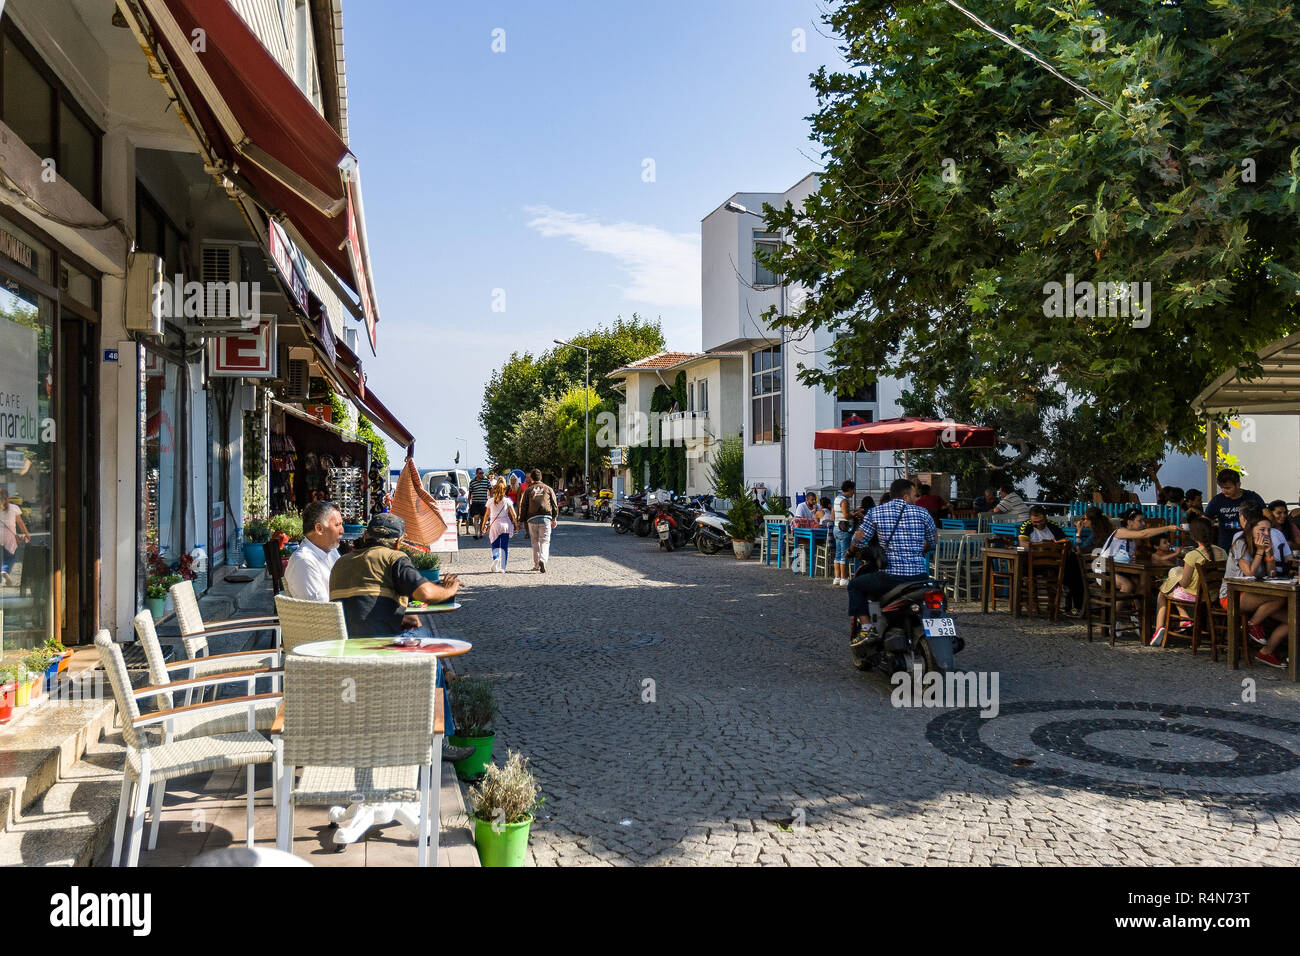 Bozcaada Street Photos by Hulki Okan Tabak. Summer 2015, Canakkale, Turkey. Architecture, street, history, people, landscape, walking. Stock Photo